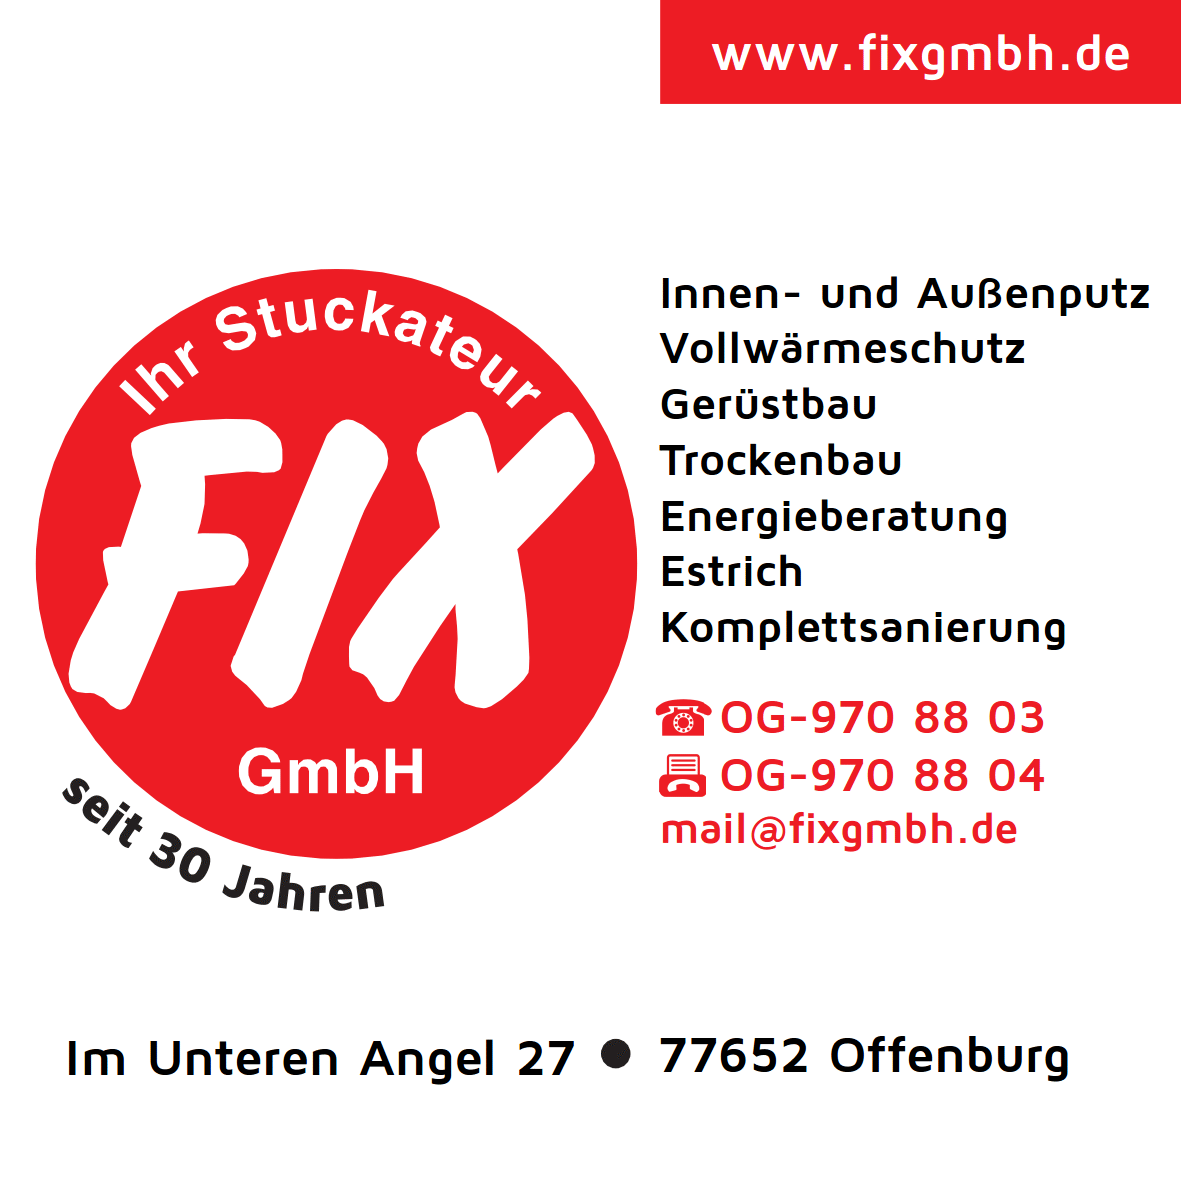 FIX GmbH